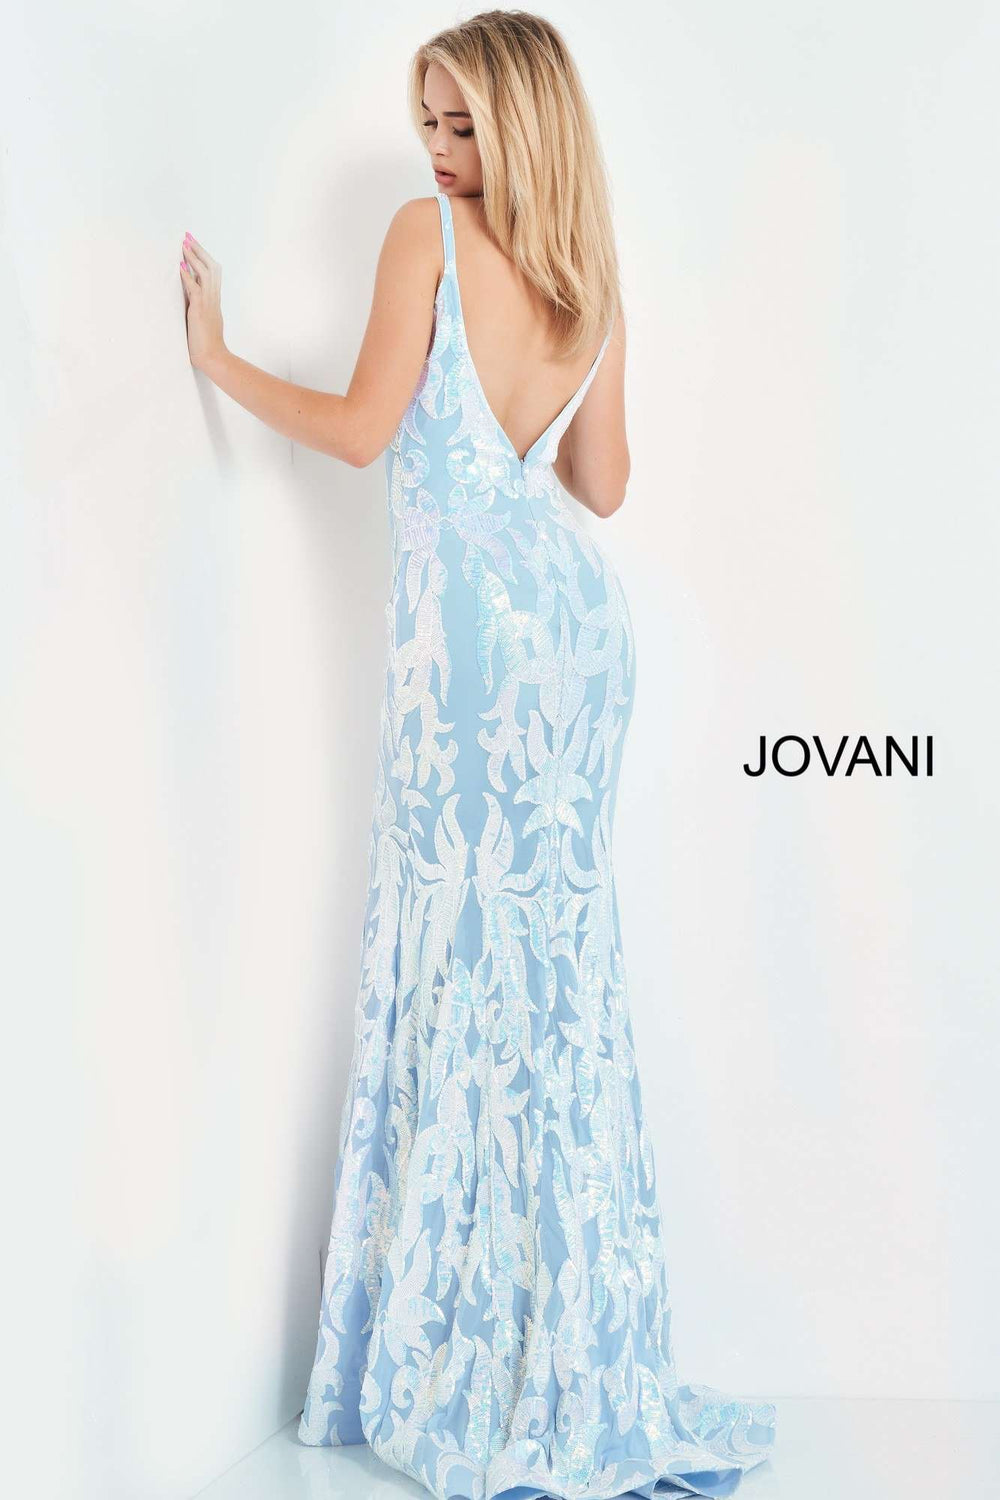 Plunging Neckline Fitted Prom Dress Jovani 3263 - Morvarieds Fashion